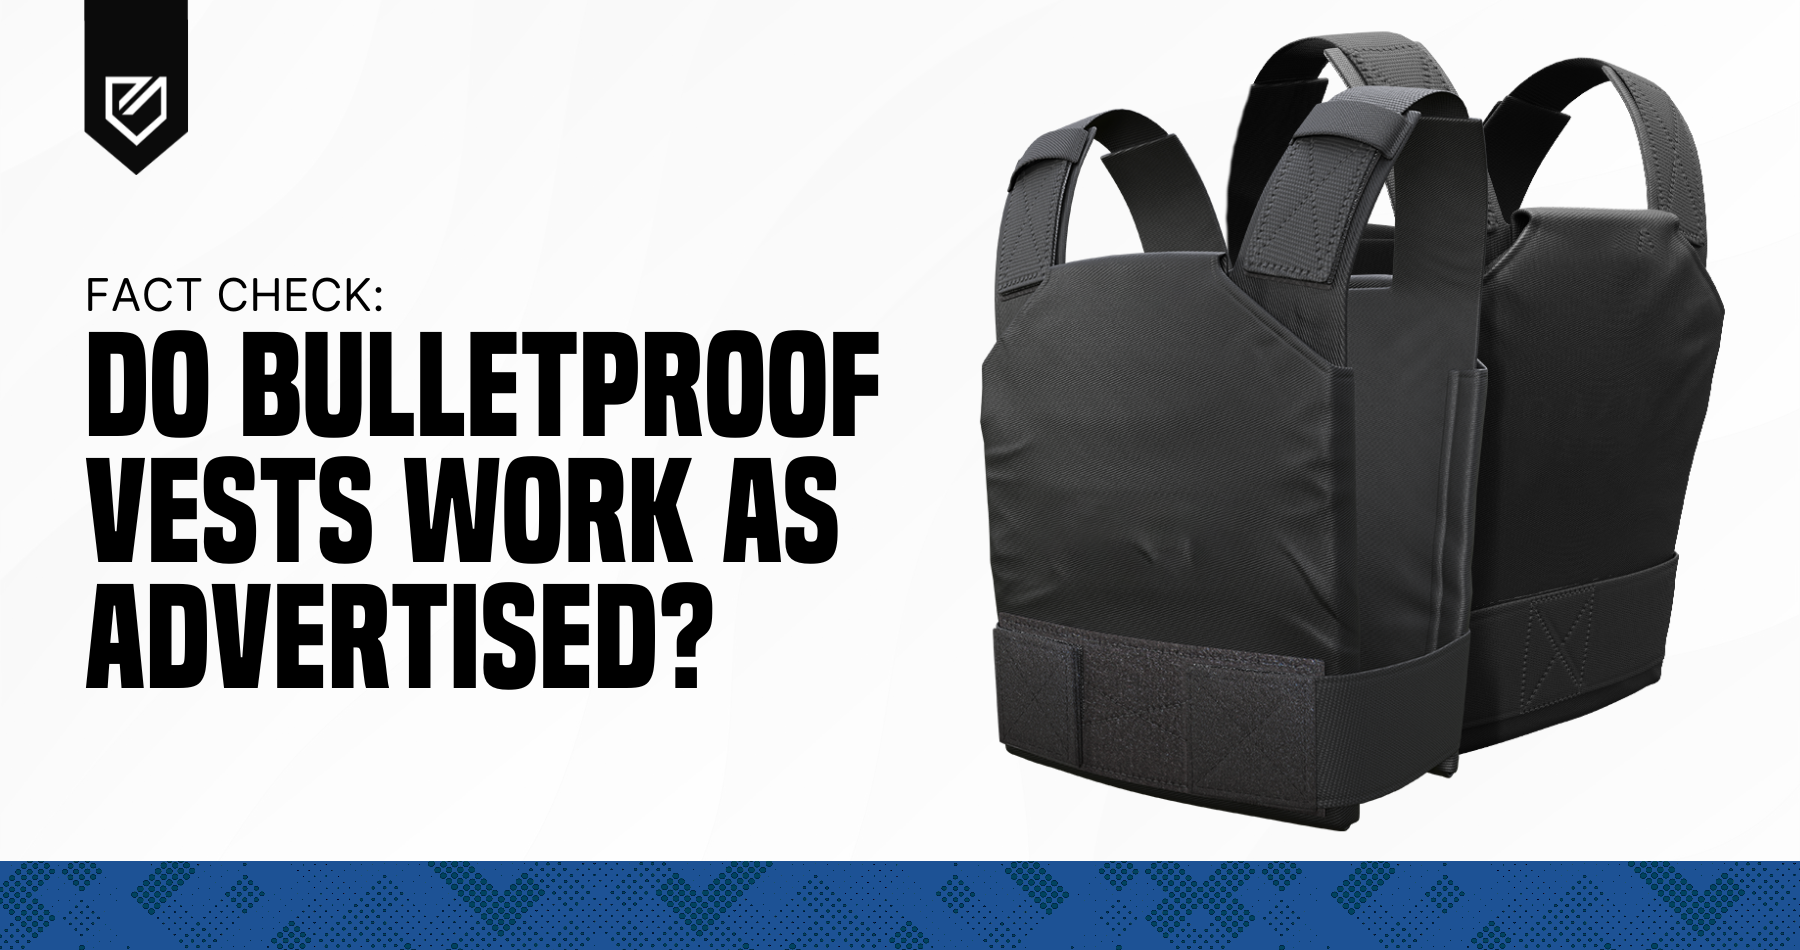 Fact Check: Do Bulletproof Vests Work as Advertised?